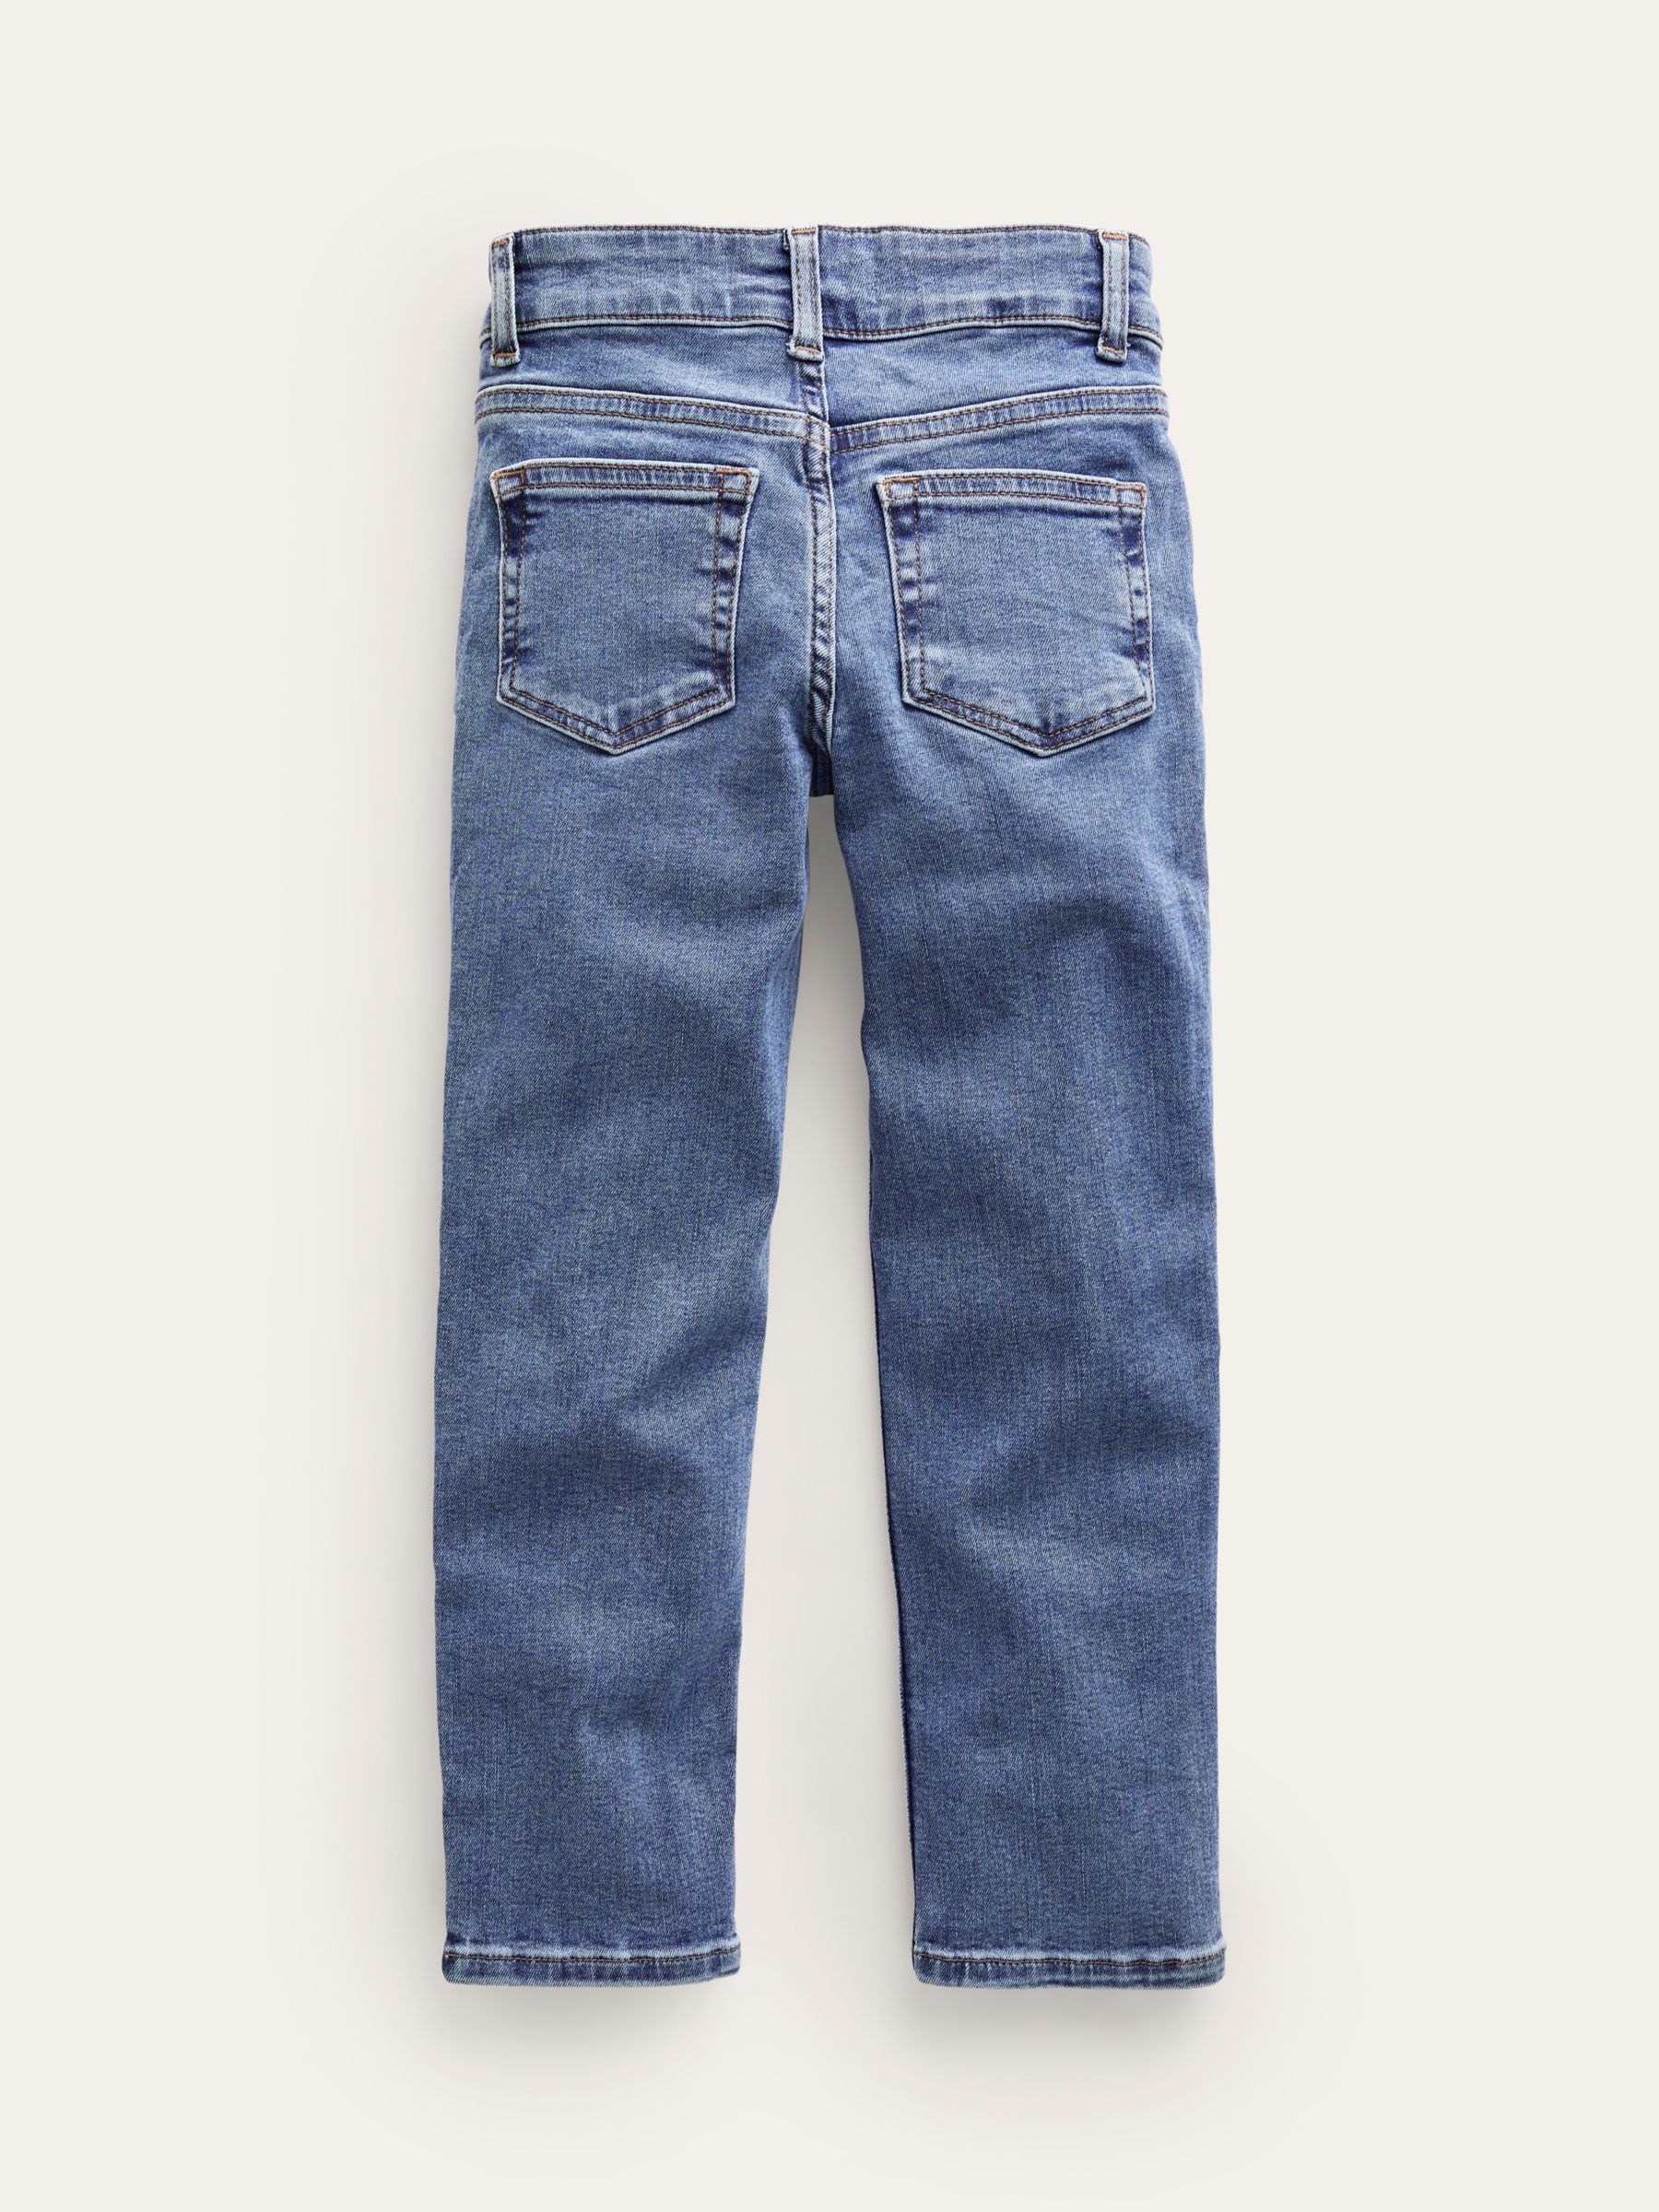 Mini Boden Kids' Adventure-Flex Slim Fit Jeans, Mid Vintage, 3 years